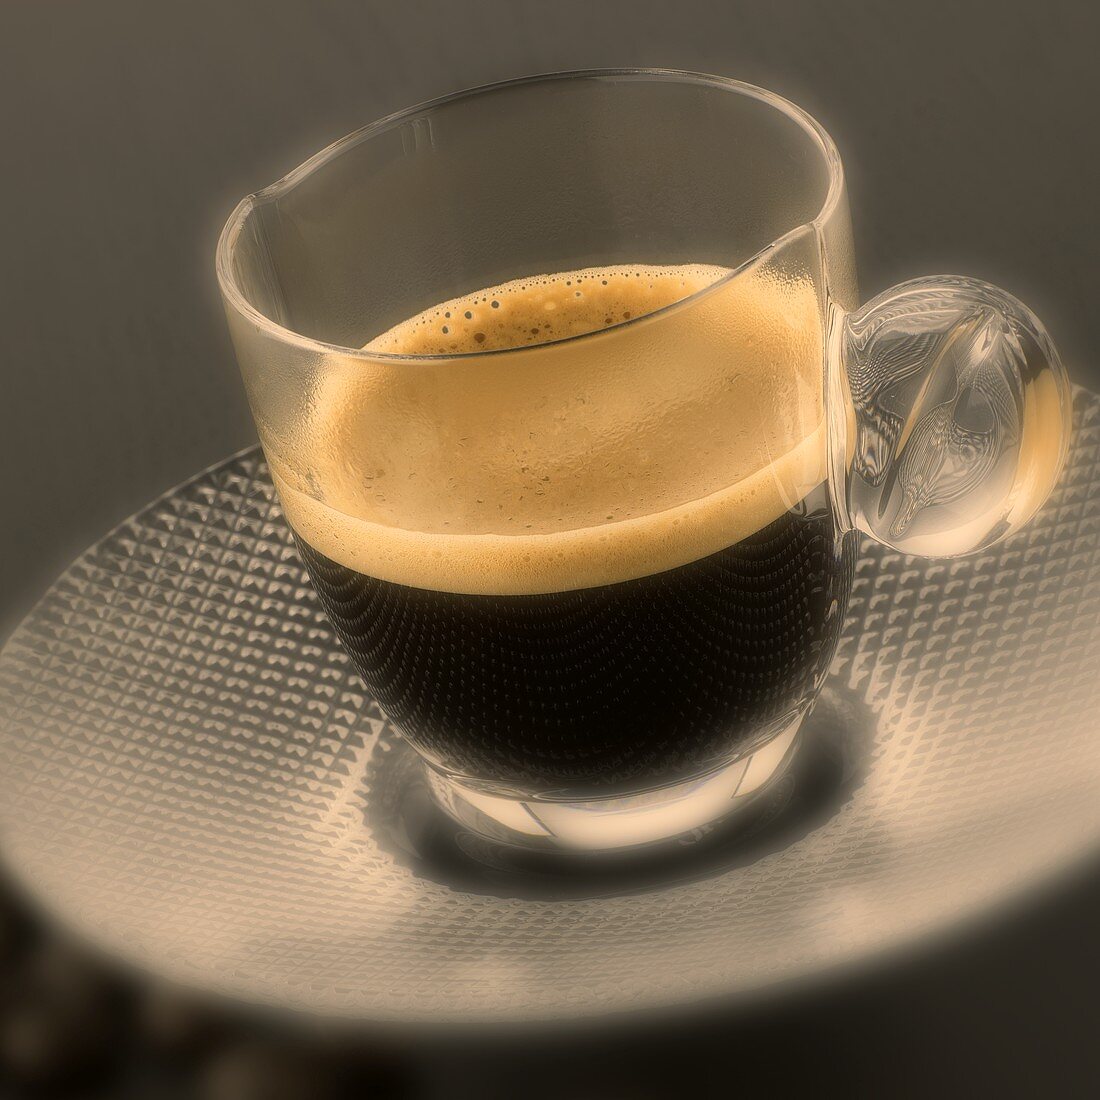 An espresso in a glass cup